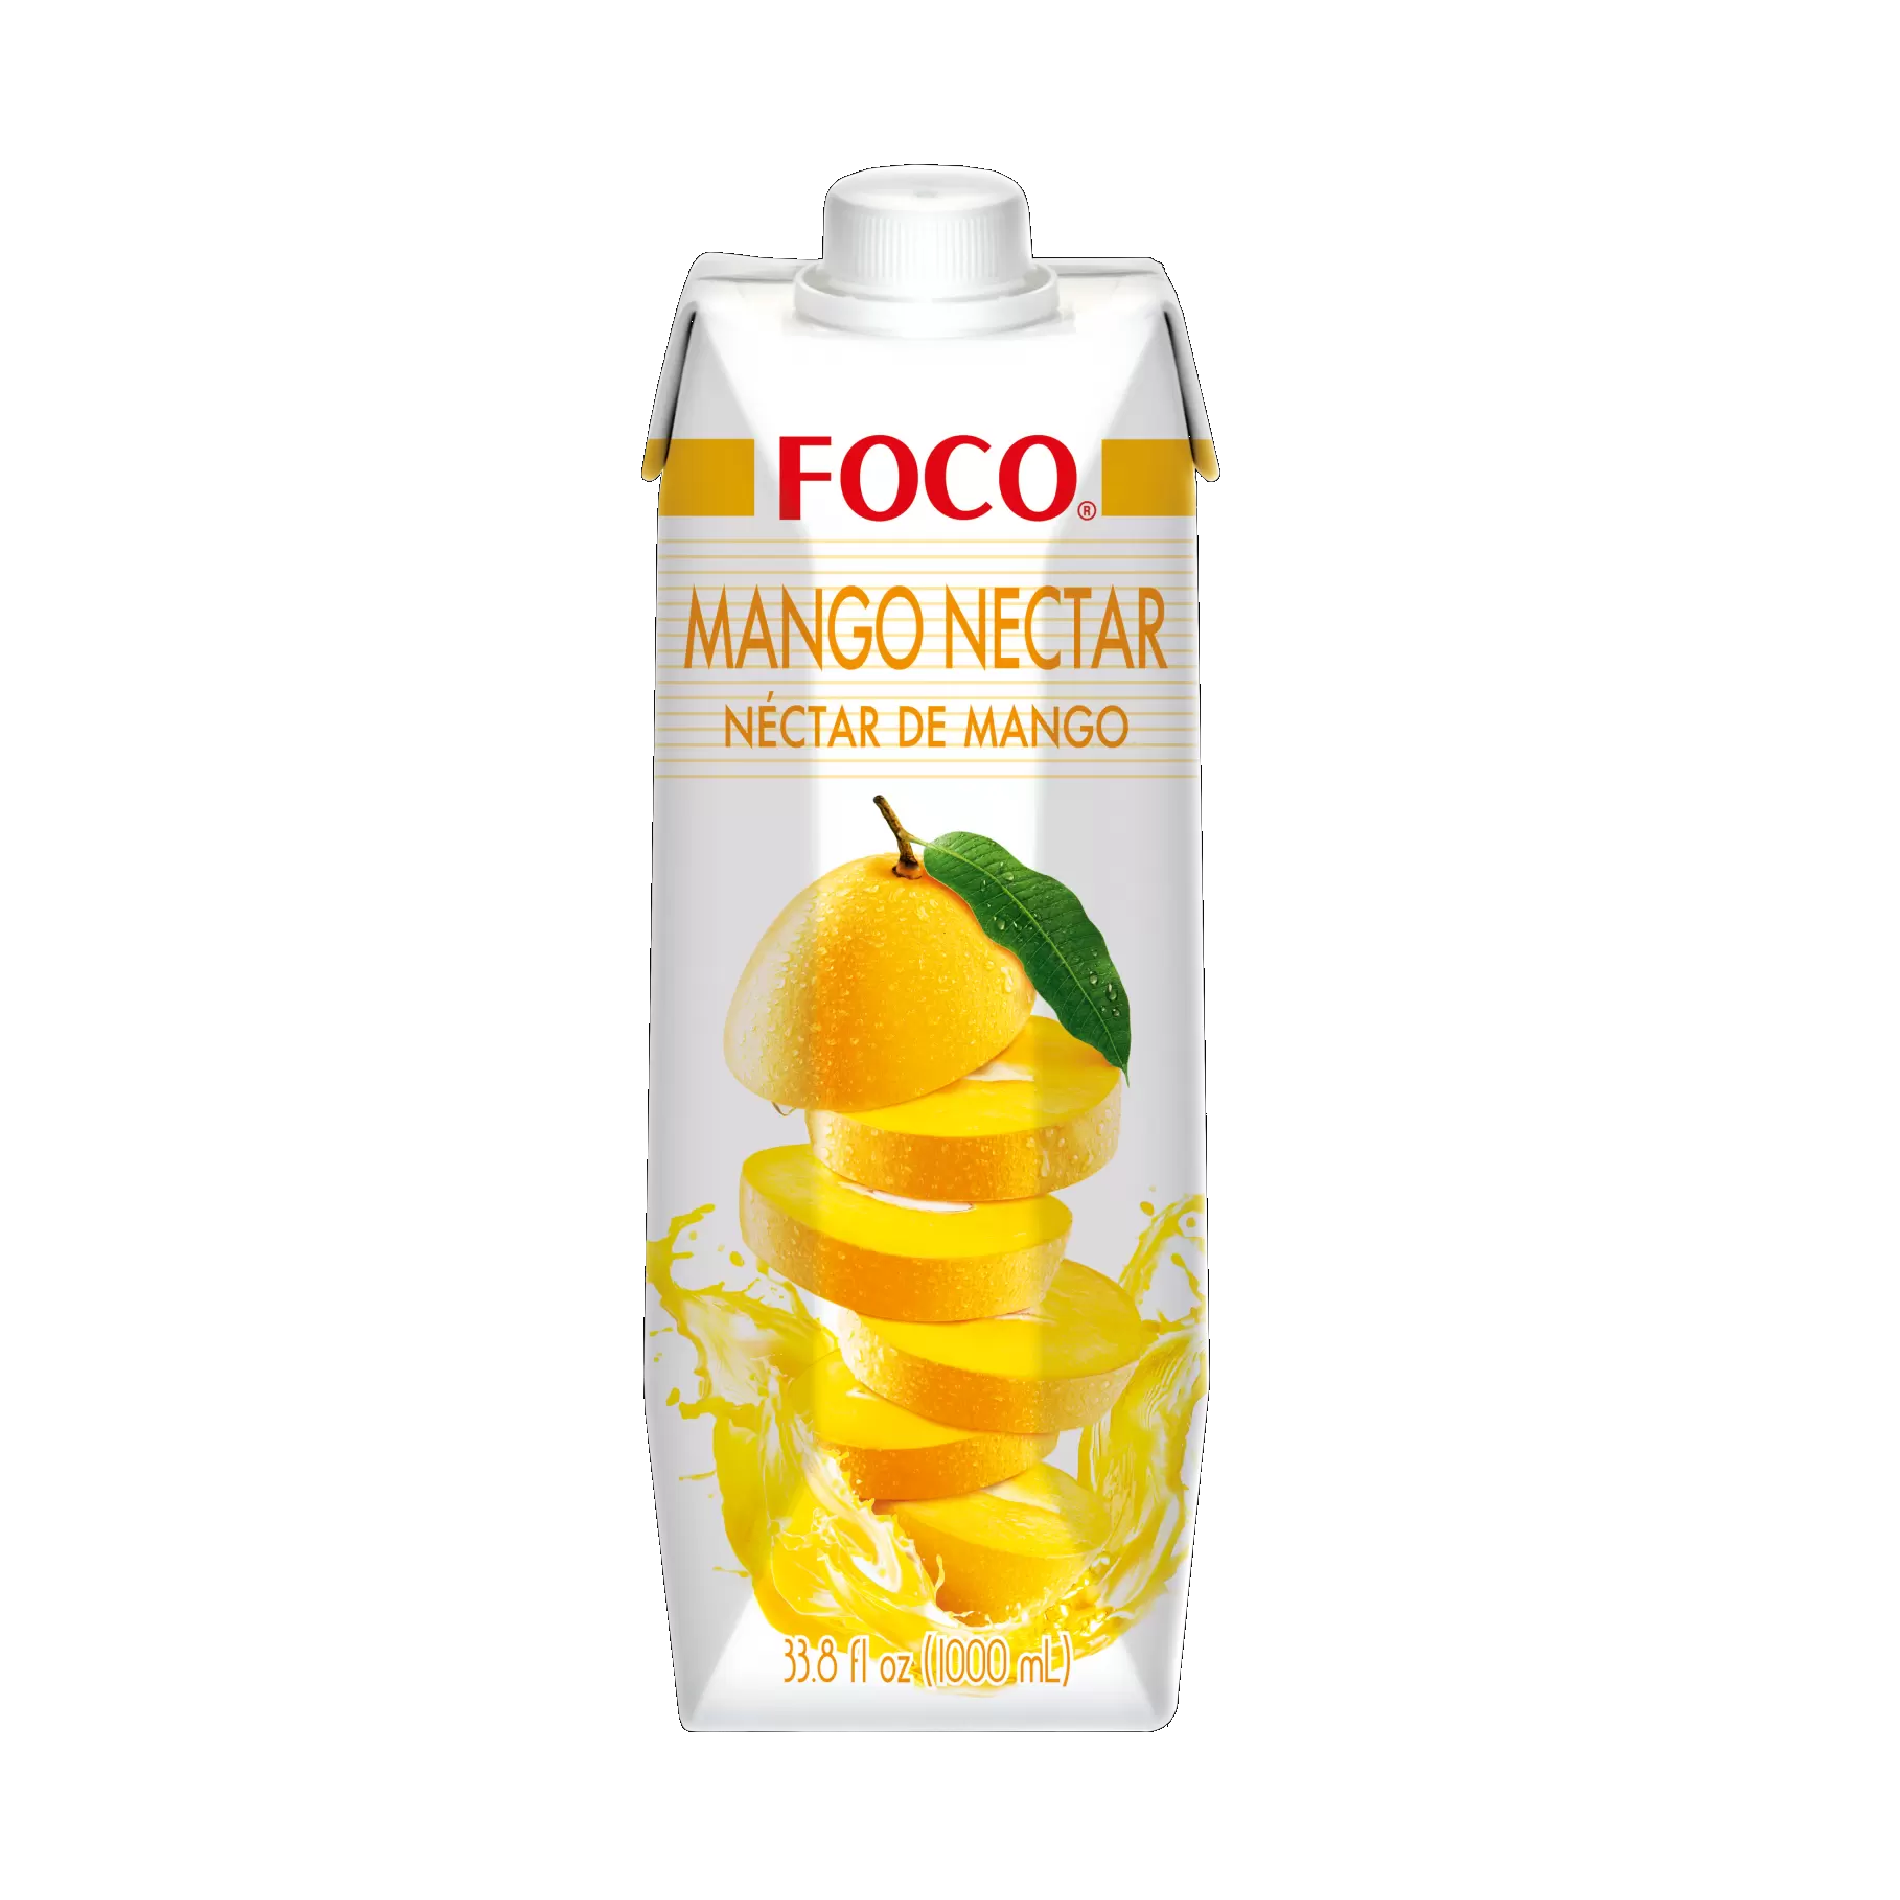 Со нектар. Нектар манго foco, 1 л. Нектар манго foco, 330 мл.. Нектар foco манго, 0.33 л. Нектар манго (1000 мл).